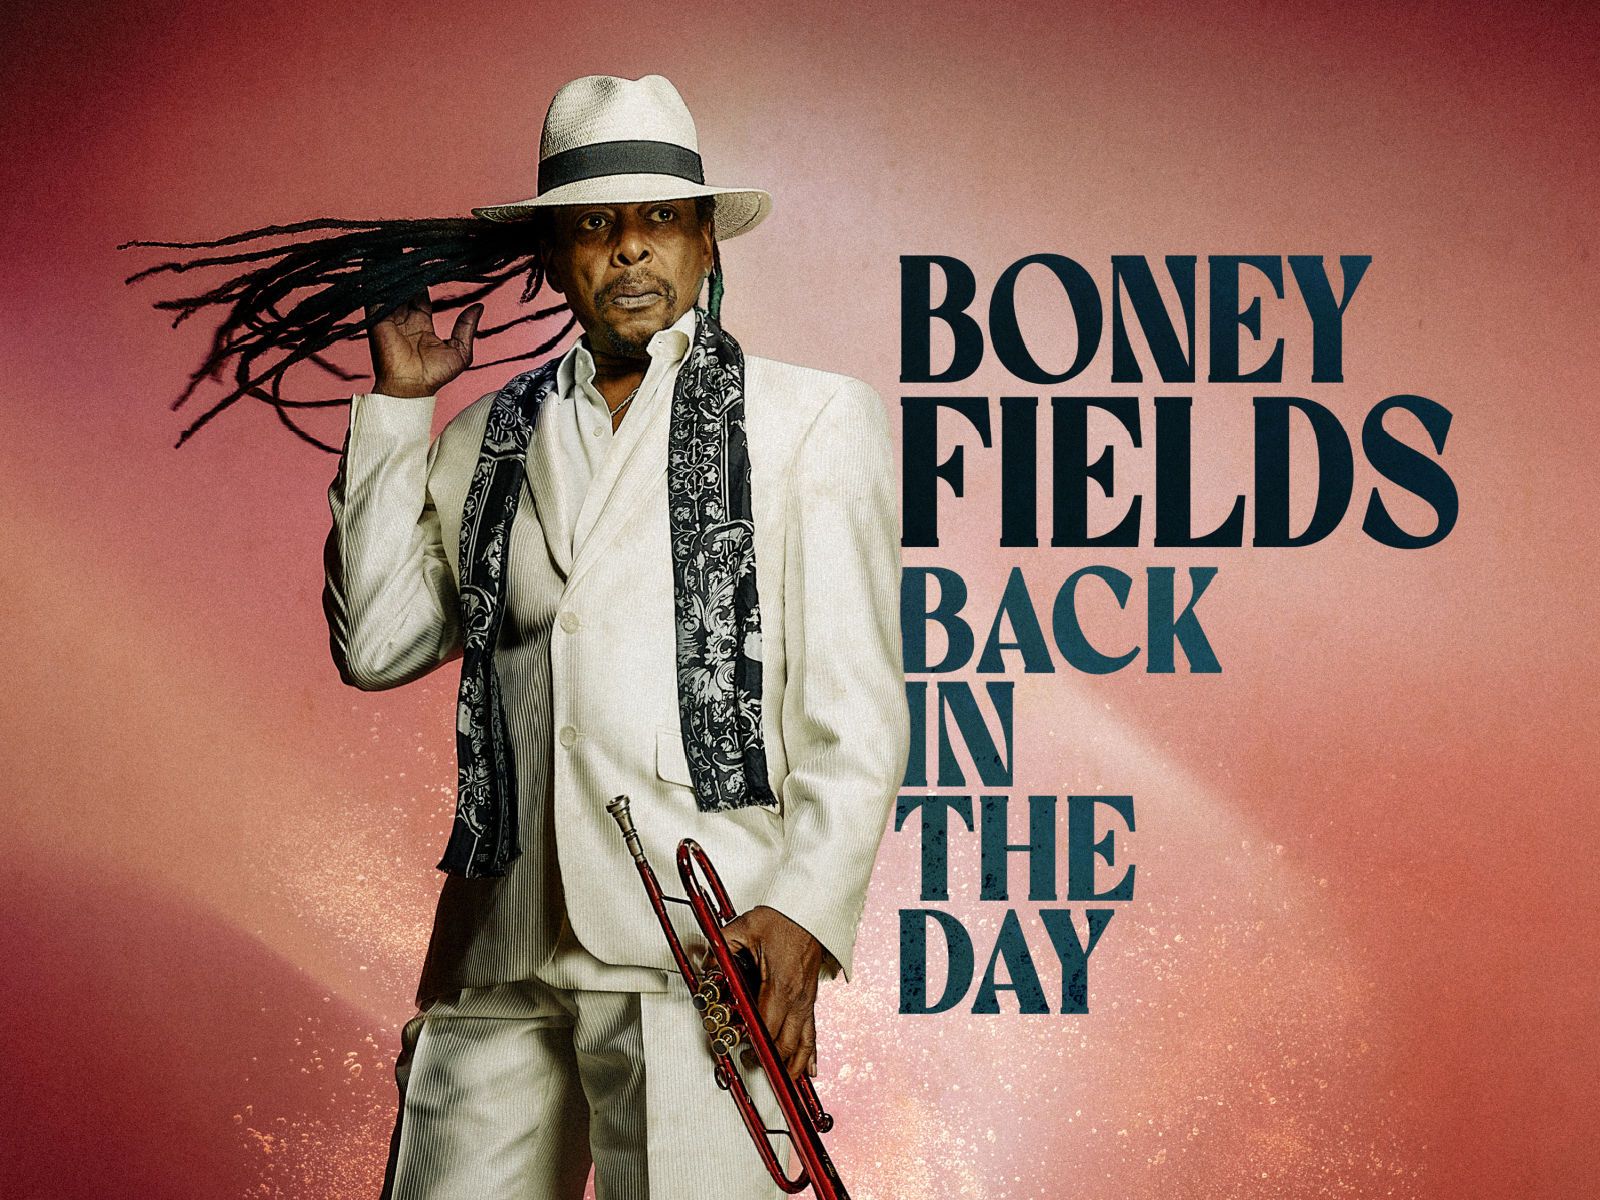 Boney Fields Announce his new Music  - Jazz Radio Review